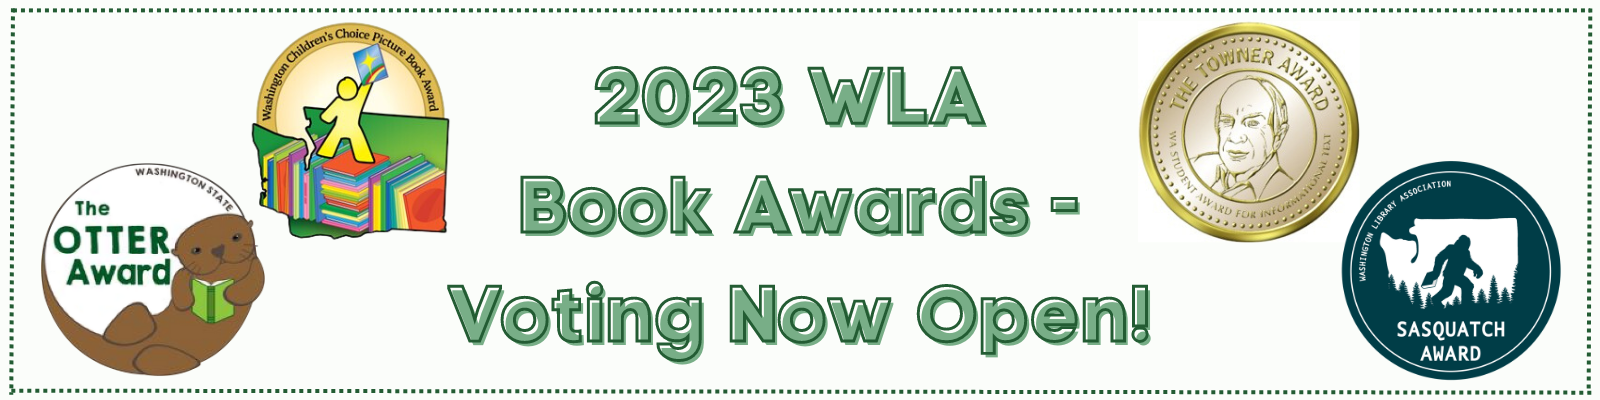 Banner image advertising WLA book Awards voting